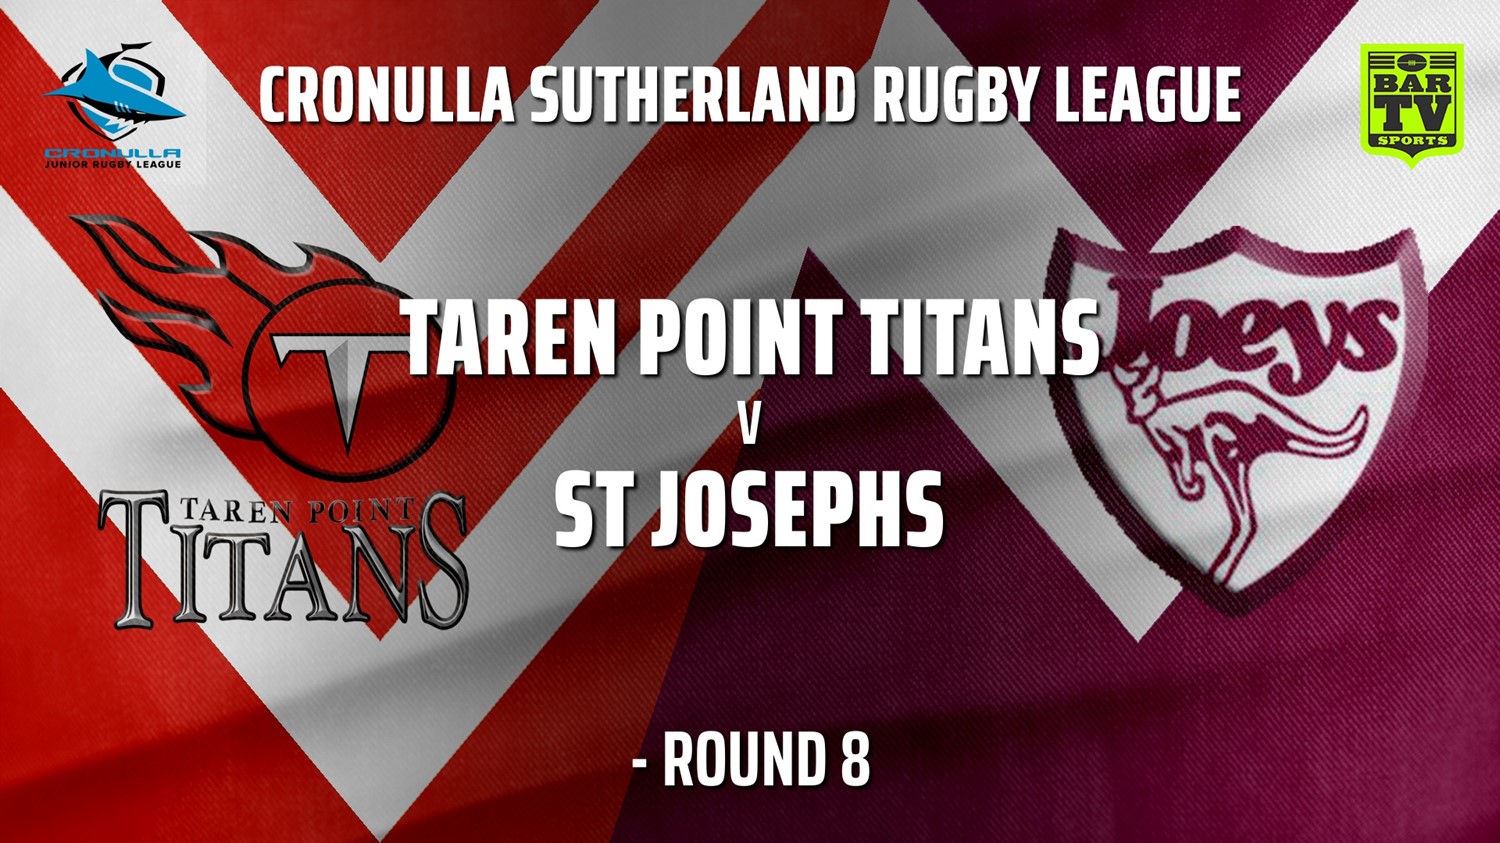 210626-Cronulla Juniors - Under 6s Bronze - Round 8 - Taren Point Titans v St Josephs Slate Image